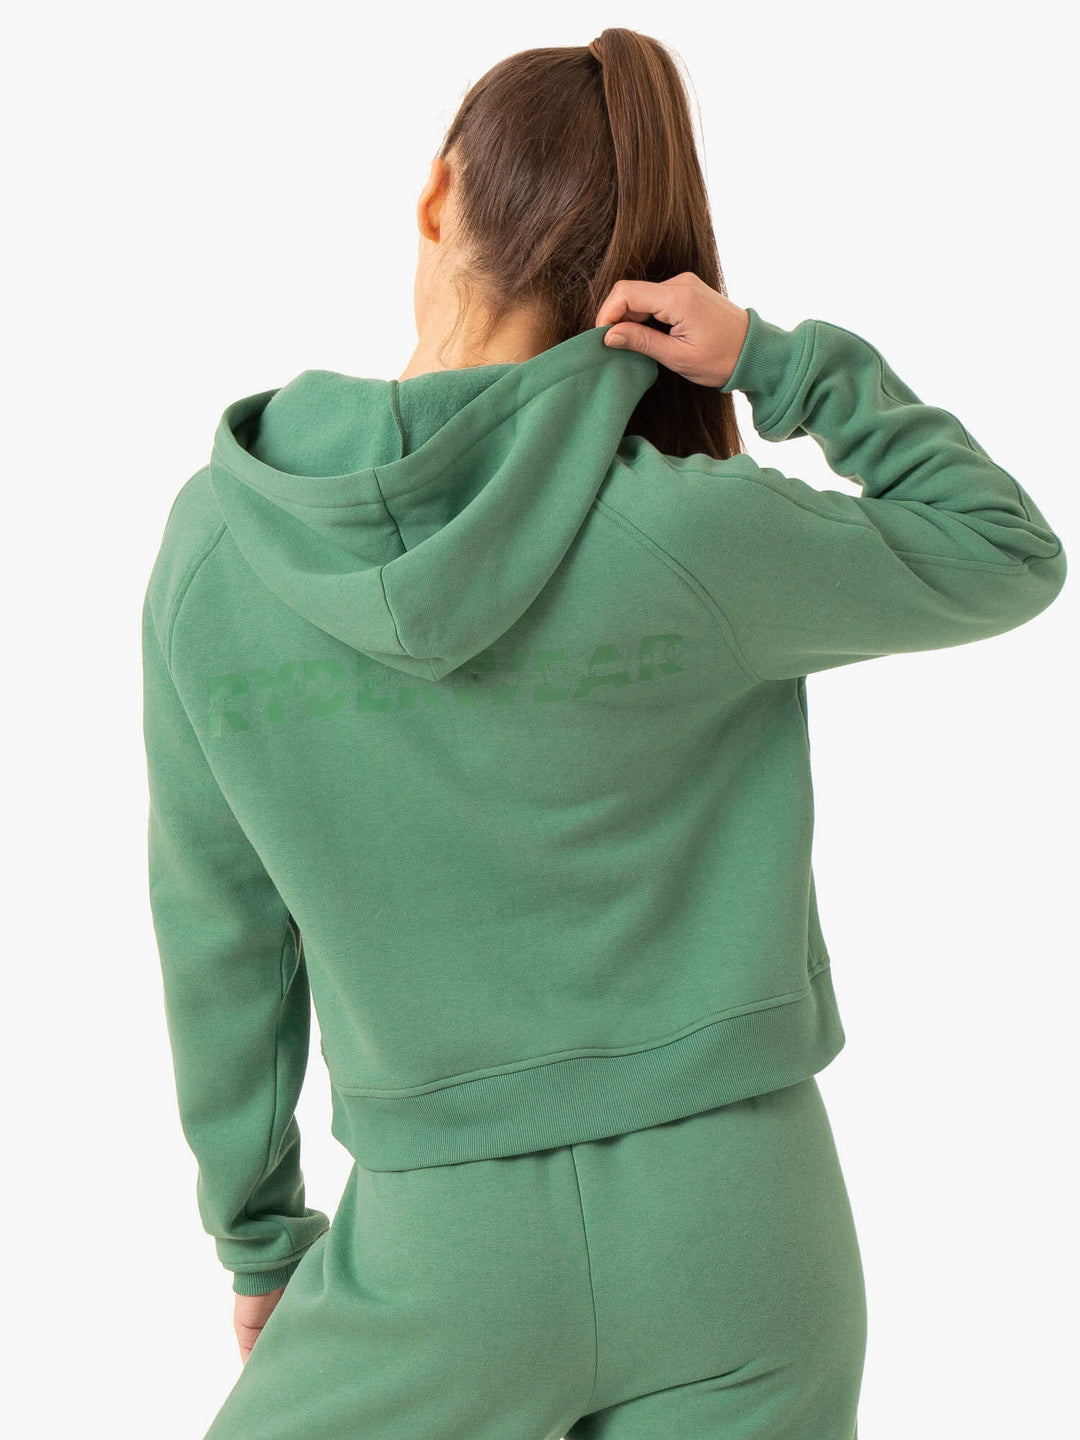 Sideline Hoodie - Forest Green Clothing Ryderwear 